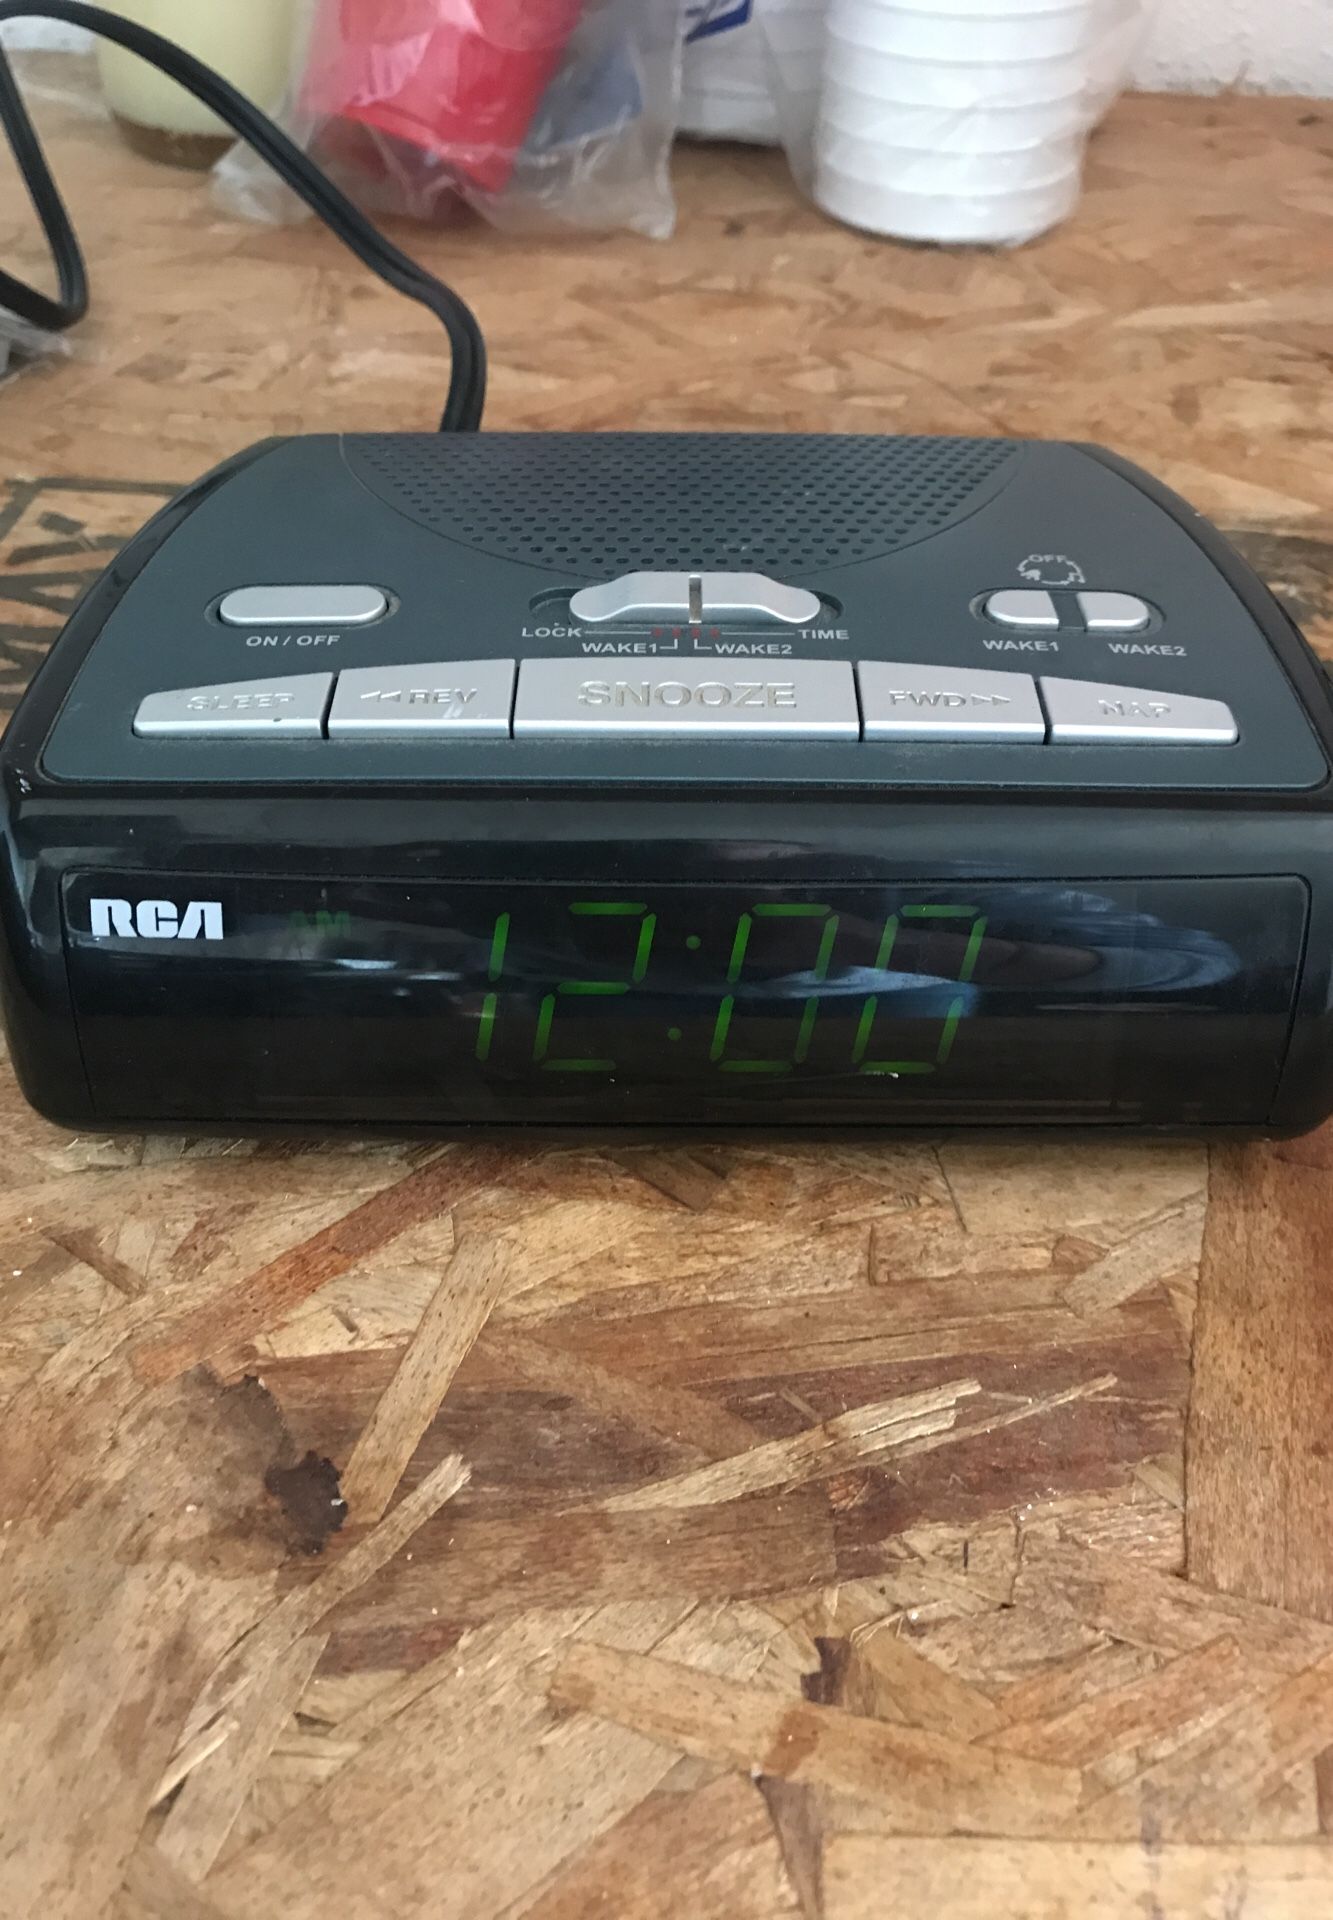 Working alarm clock